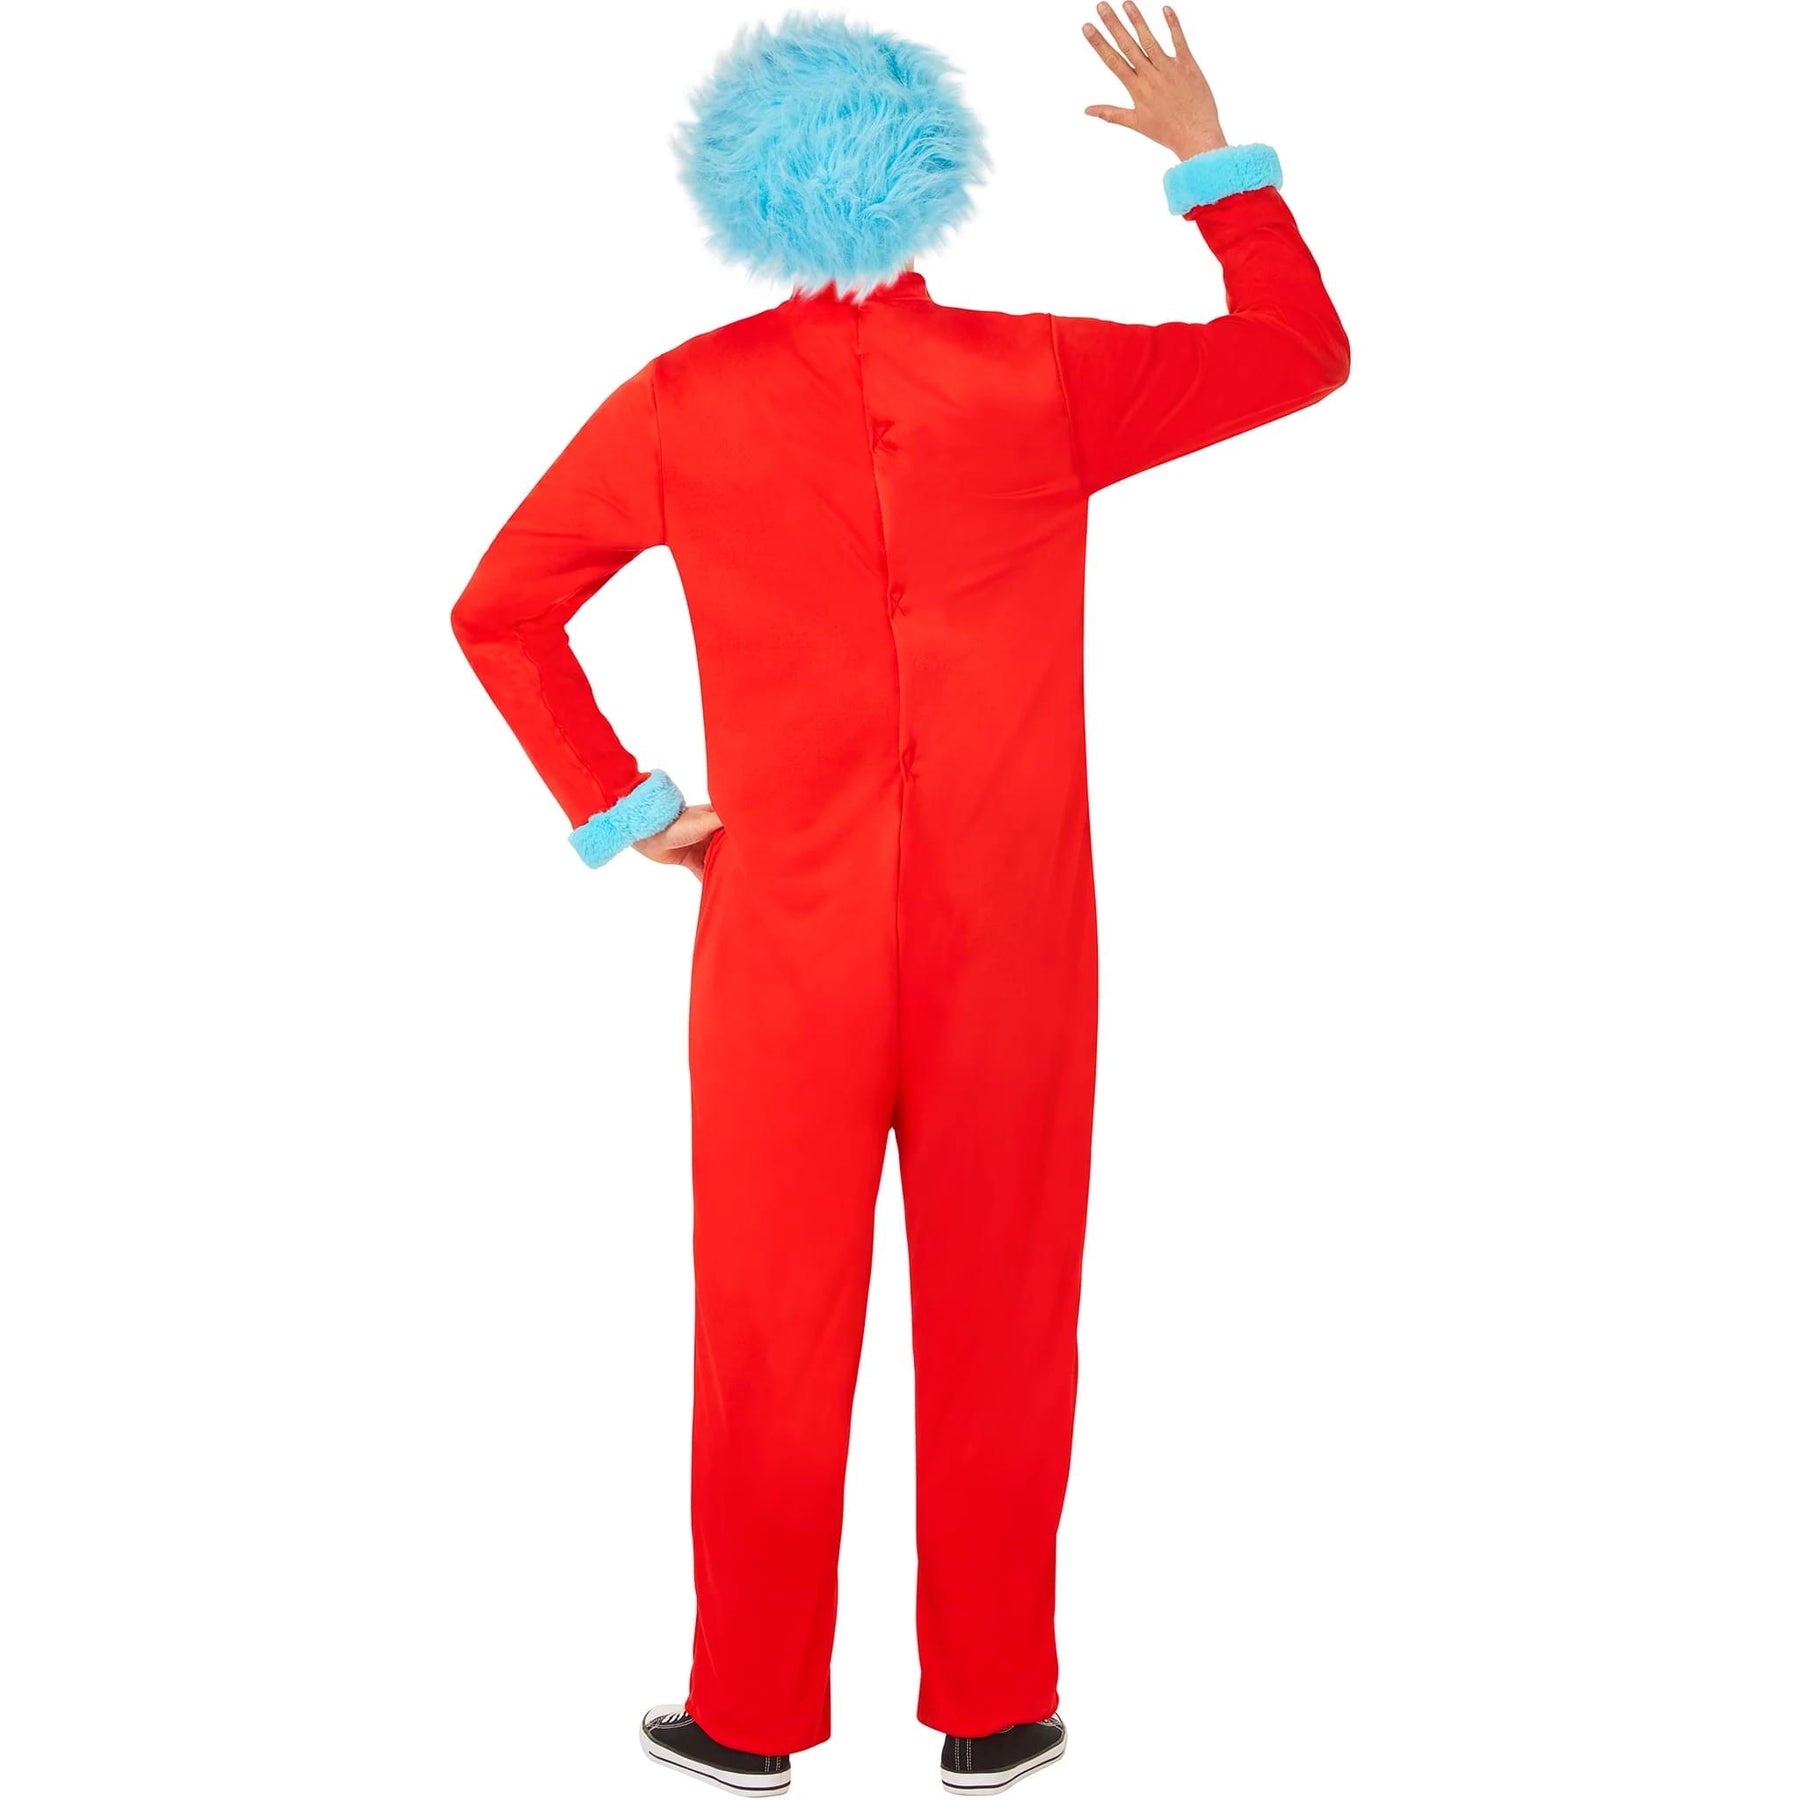 Dr Seuss Thing Jumpsuit Adult Costume